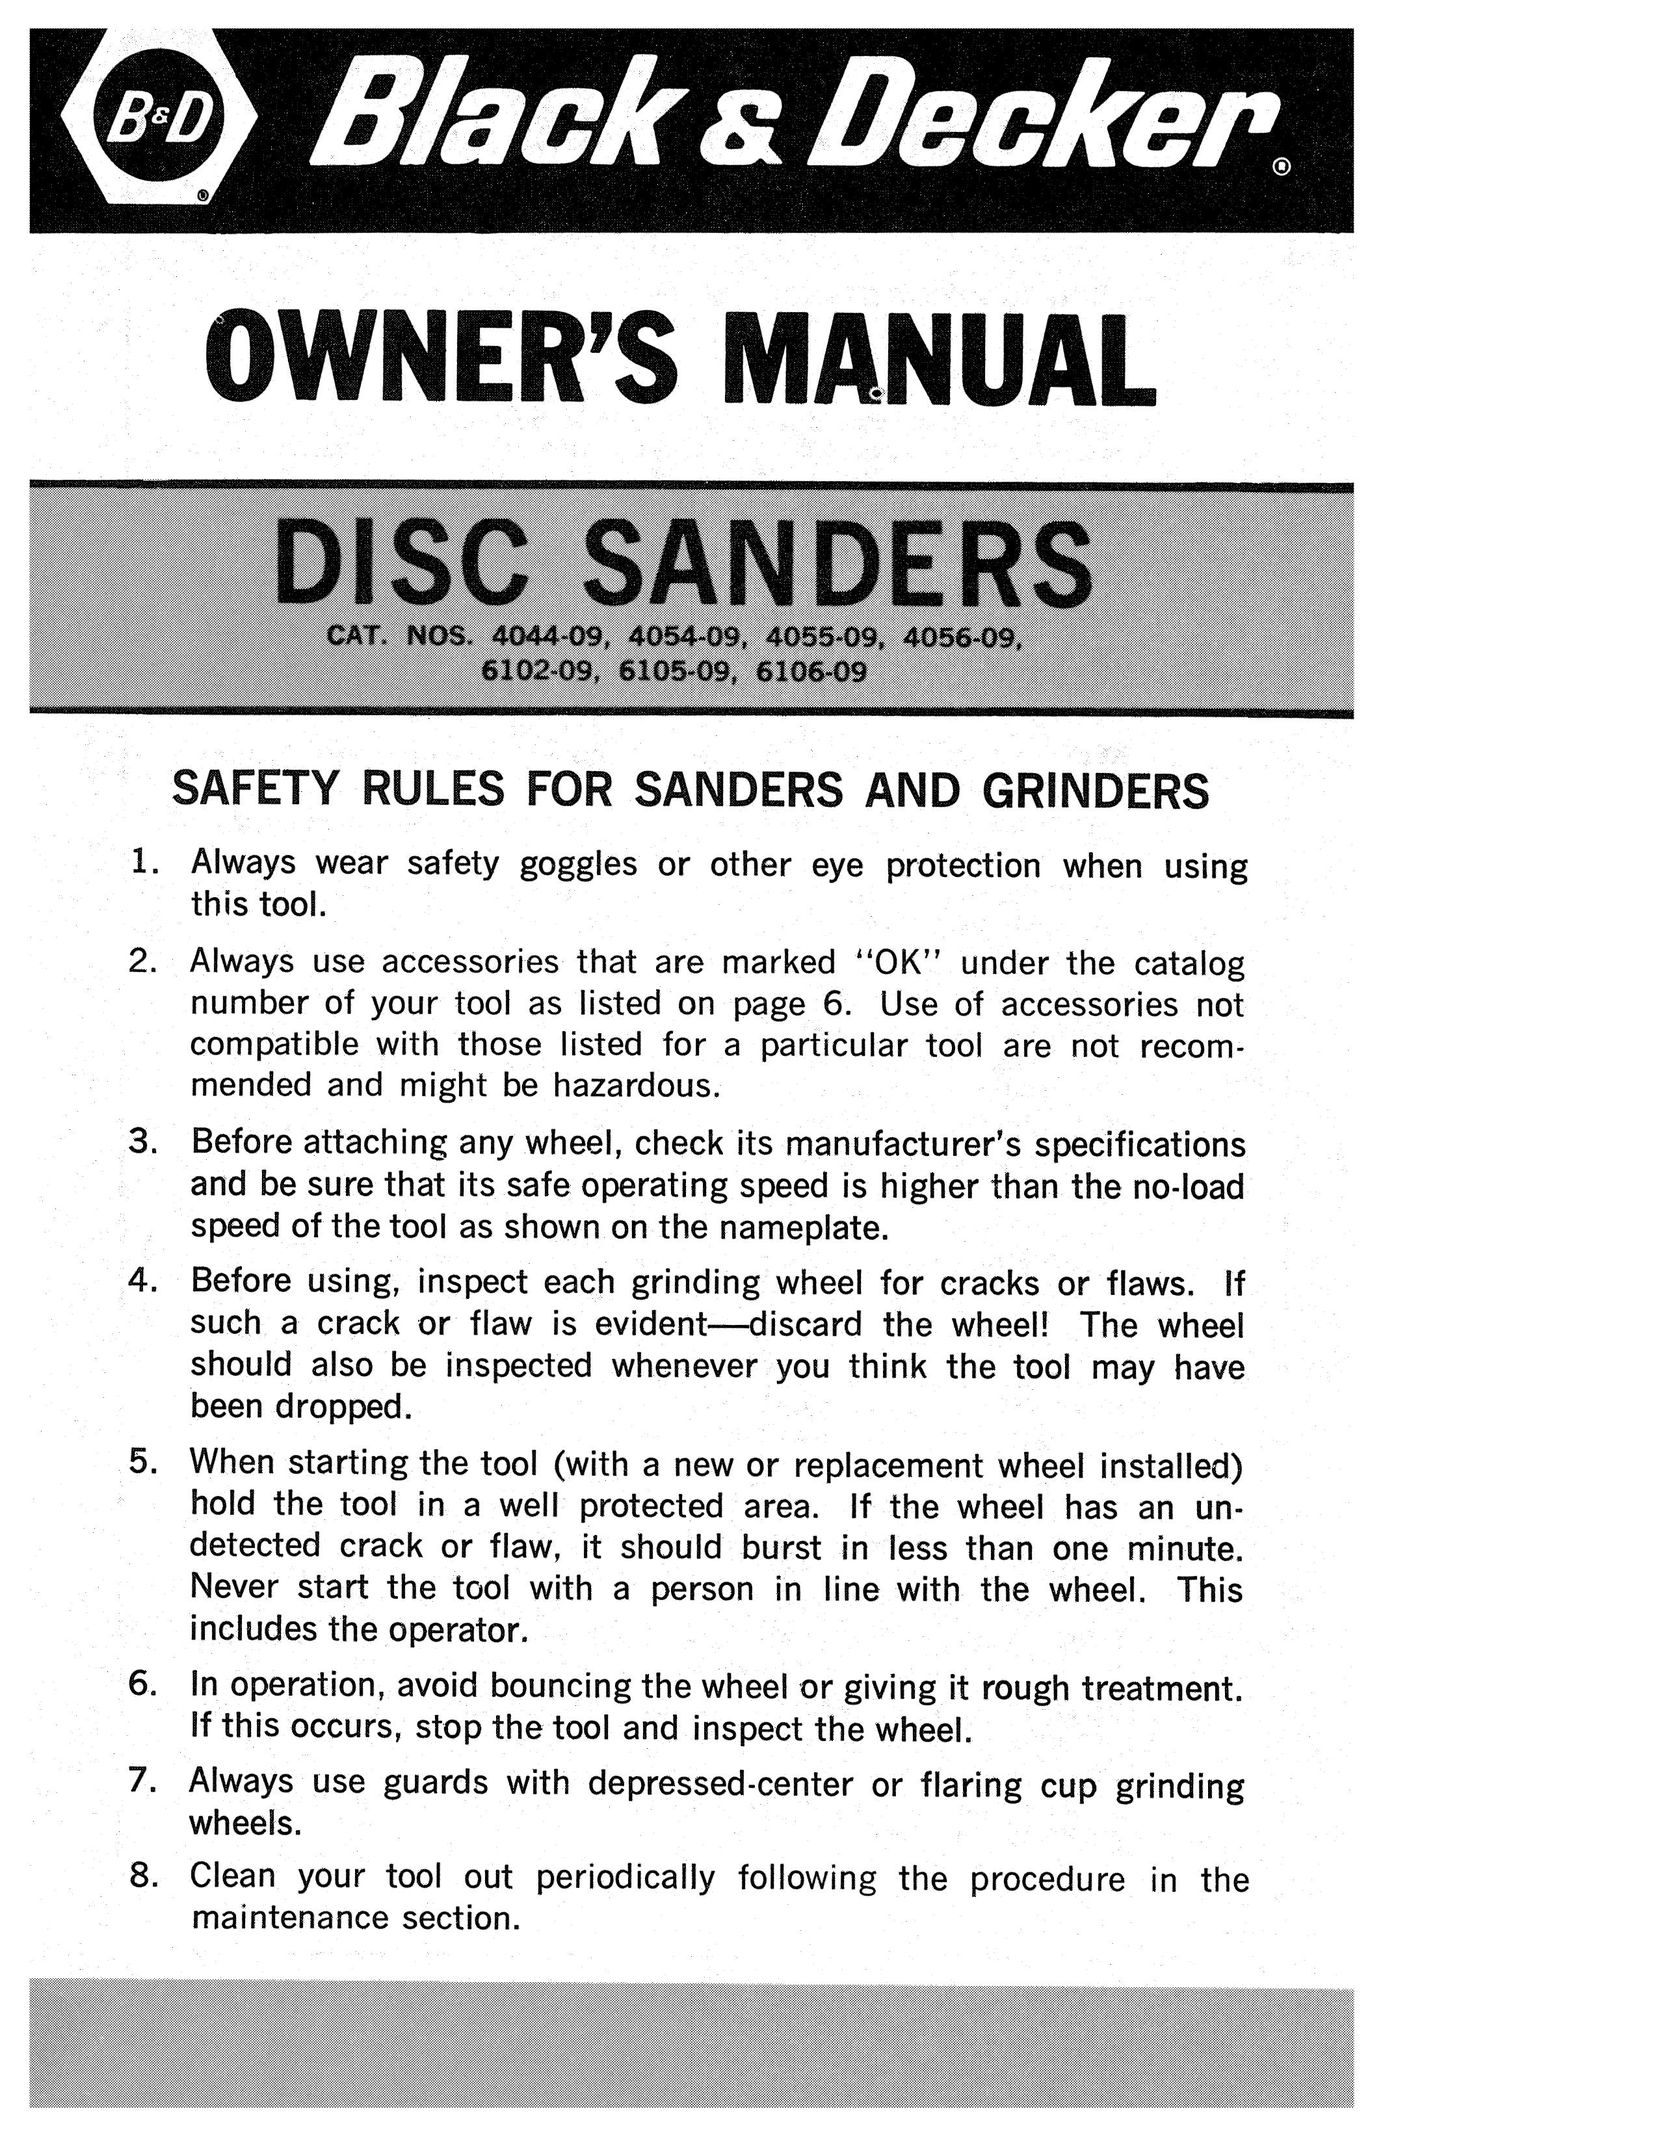 Black & Decker 4055-09 Sander User Manual